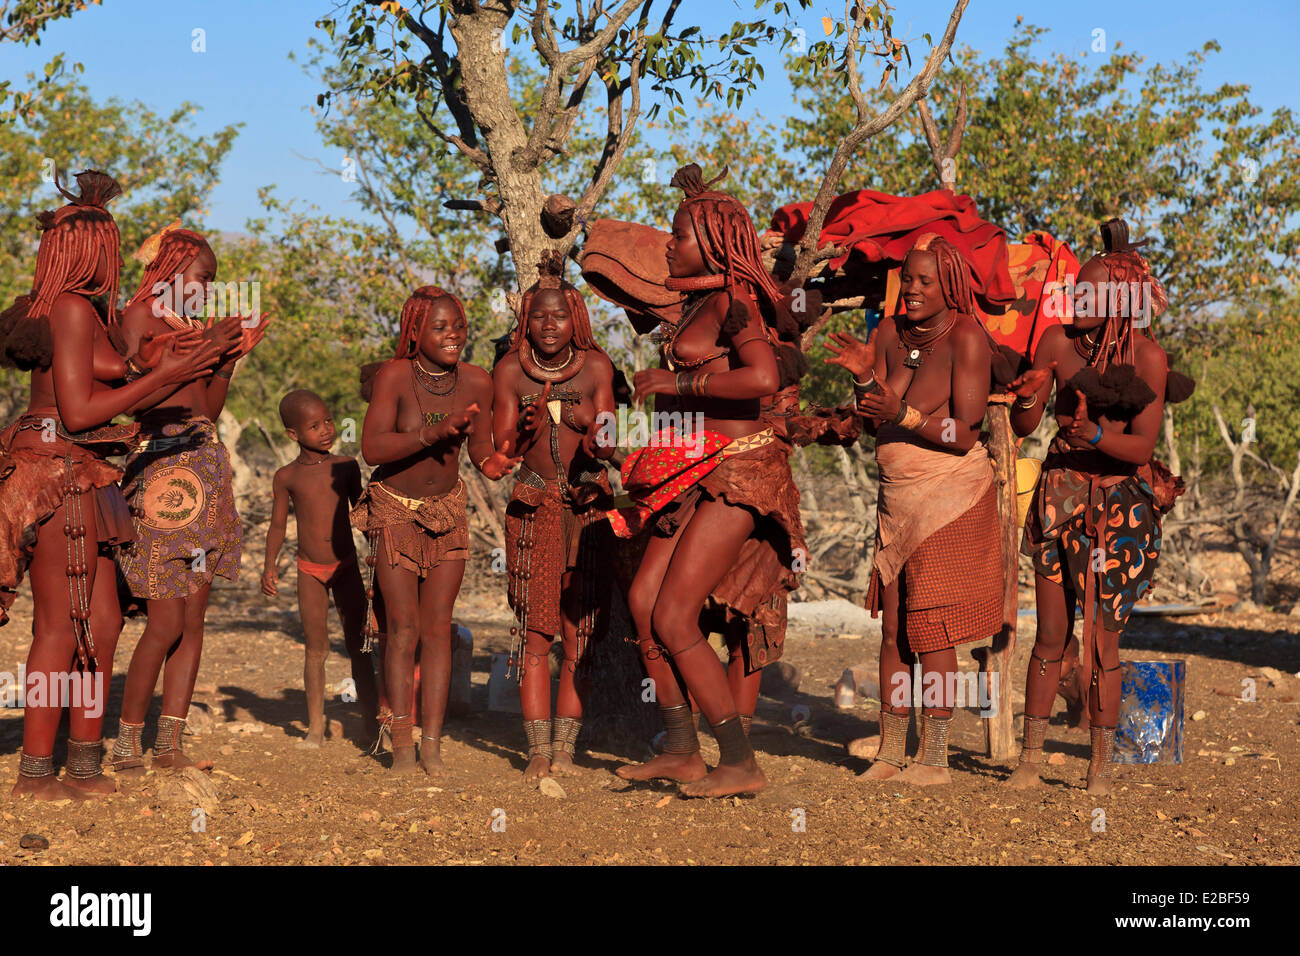 Namibia, Kunene-Region, Kaokoland oder Kaokoveld, Himba-Dorf, Bantu-Ethnie, Körper bedeckt mit Hämatit Ocker, Himba traditionelle Tänze Stockfoto